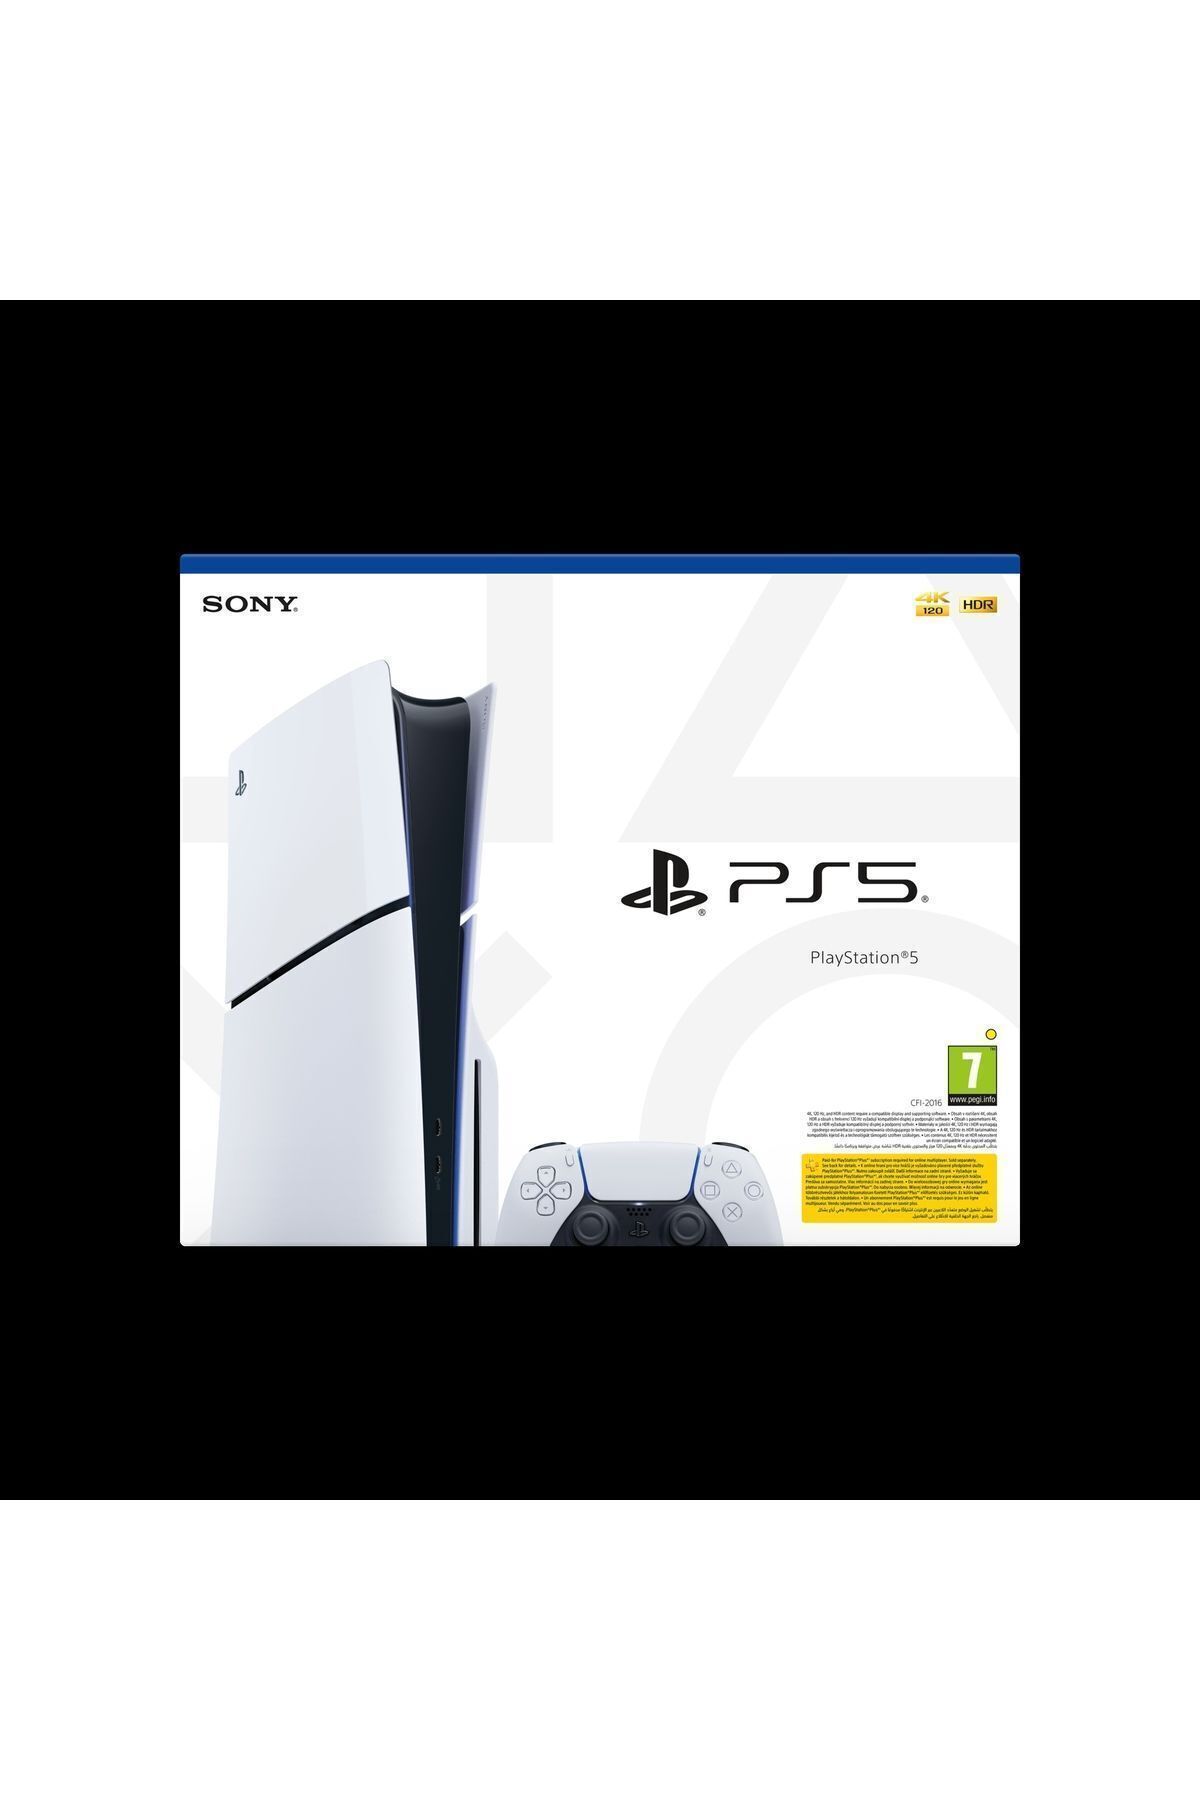 Playstation 5 Slim Standart Edition 1 TB SSD (Bilkom Garantili)